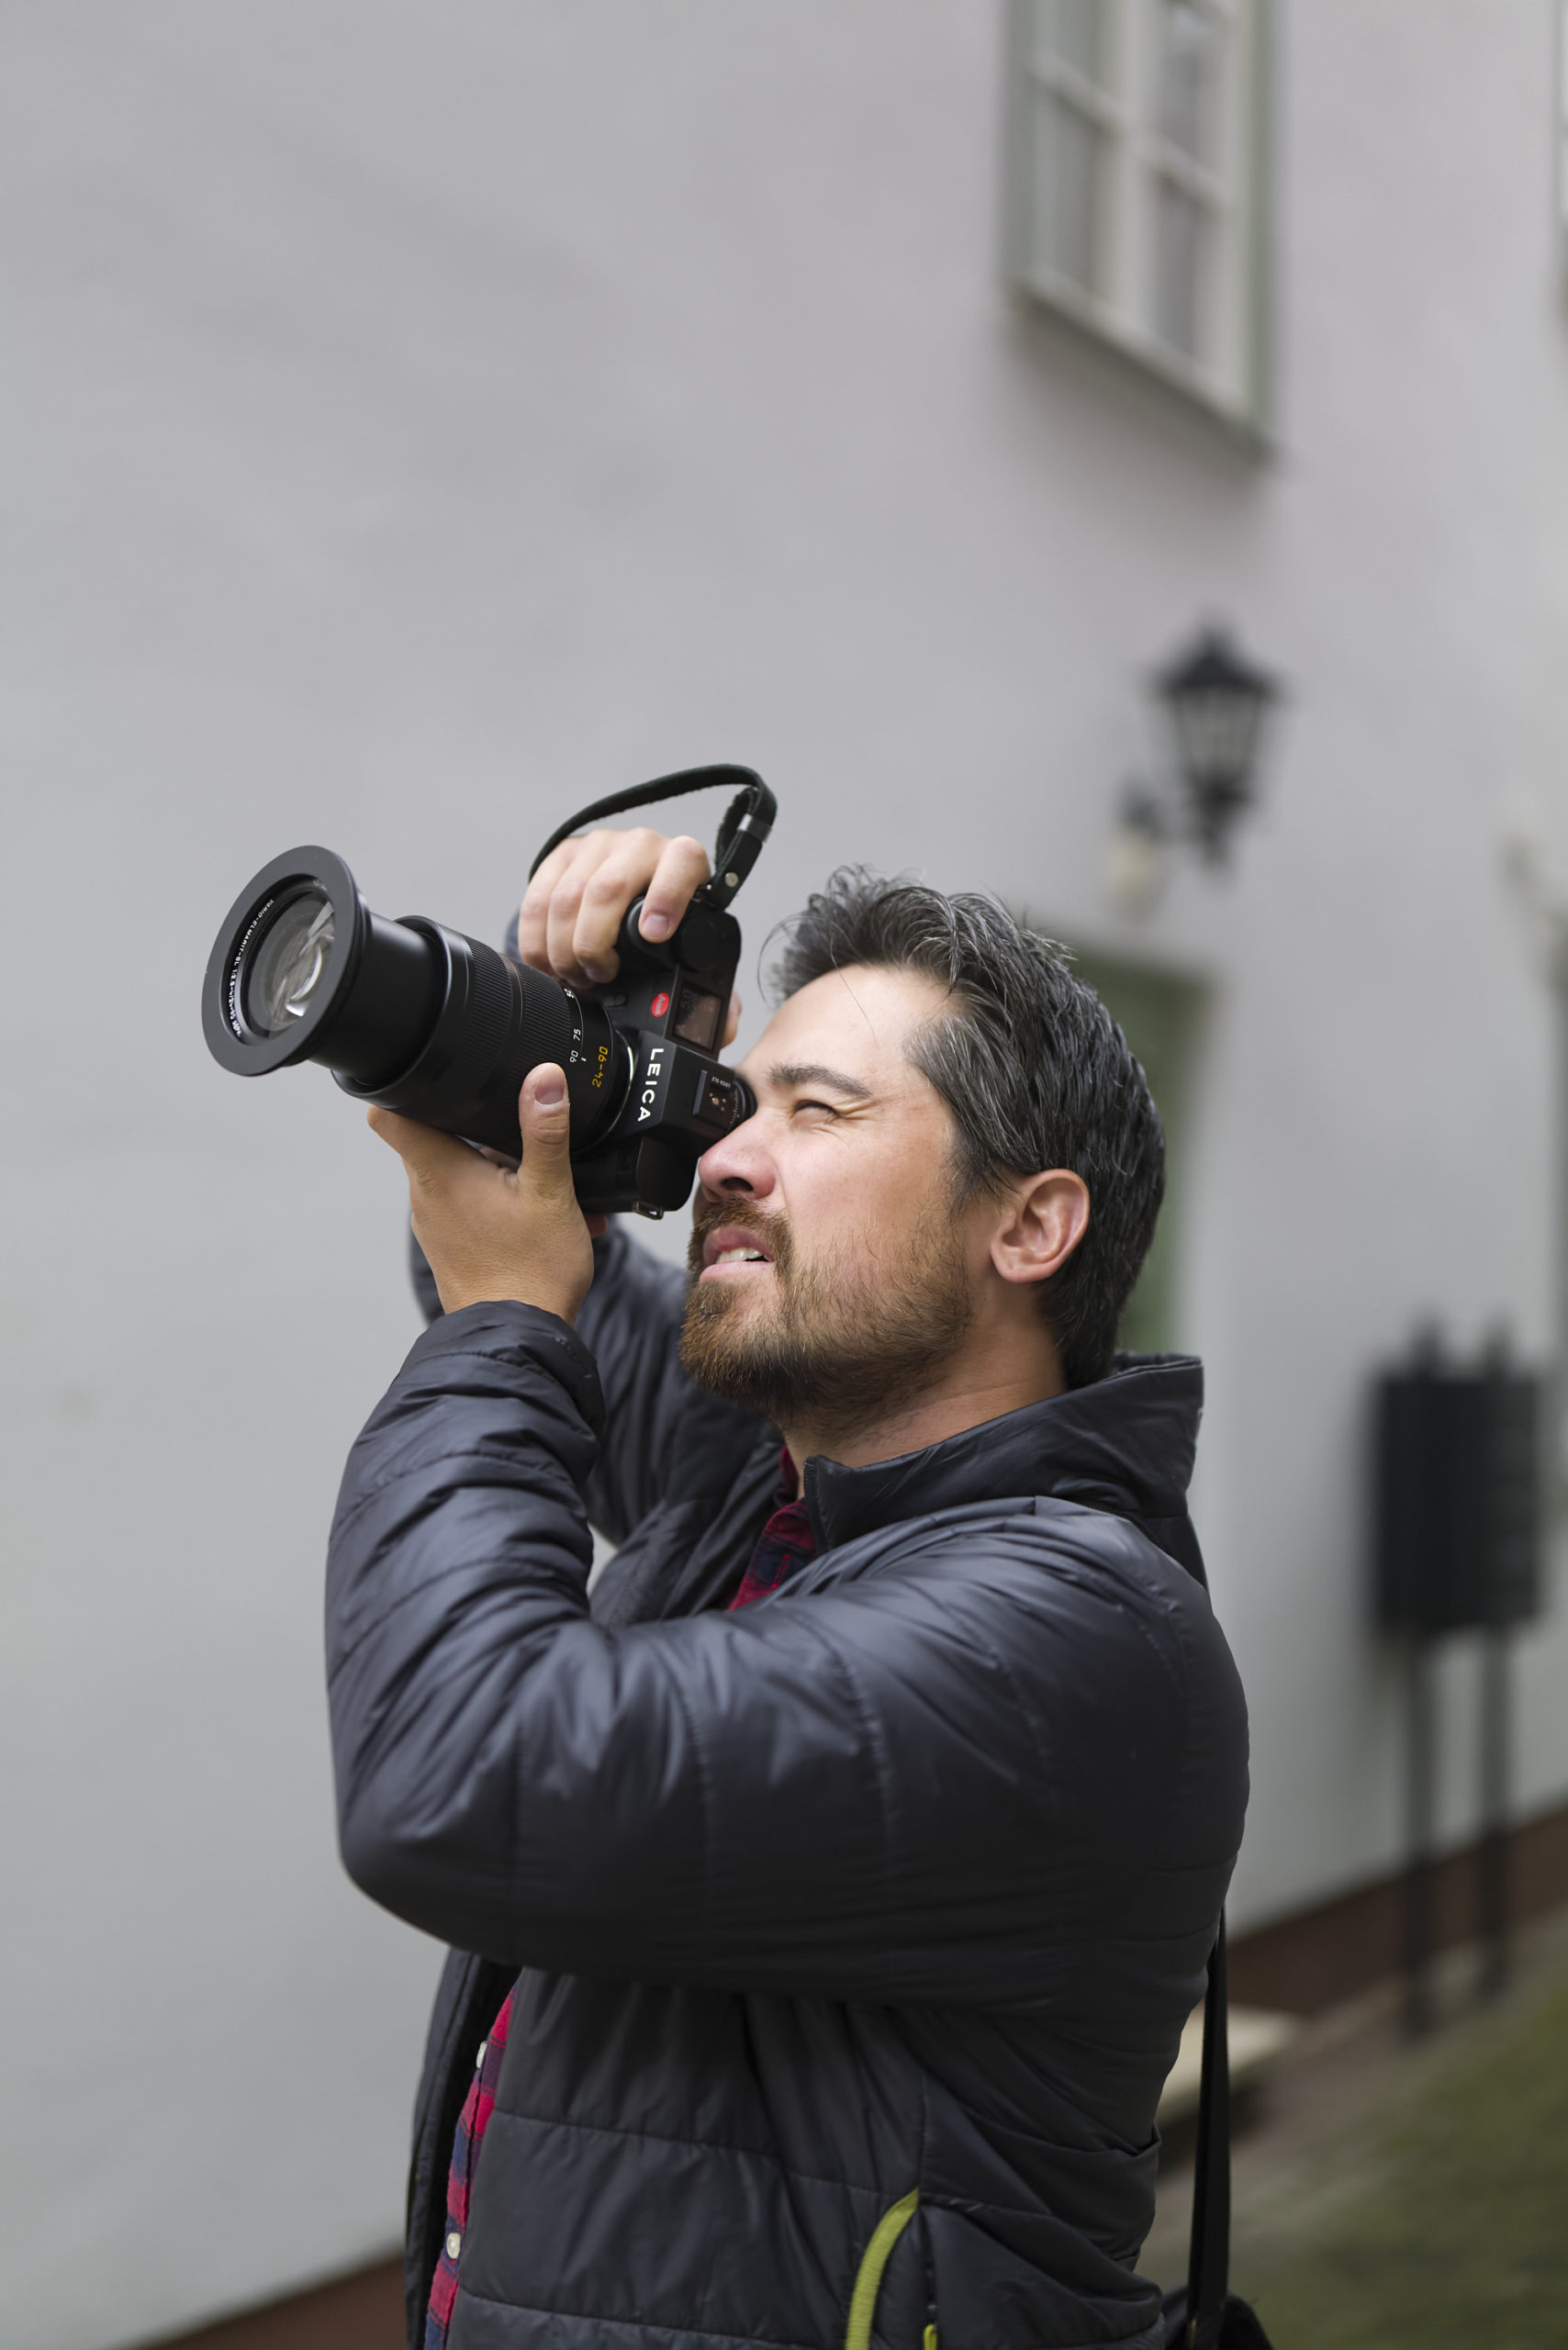 Chris Gampat The Phoblographer Leica 50mm f1.4 Summilux L Mount review Leica SL2 1.41-2000s400 1